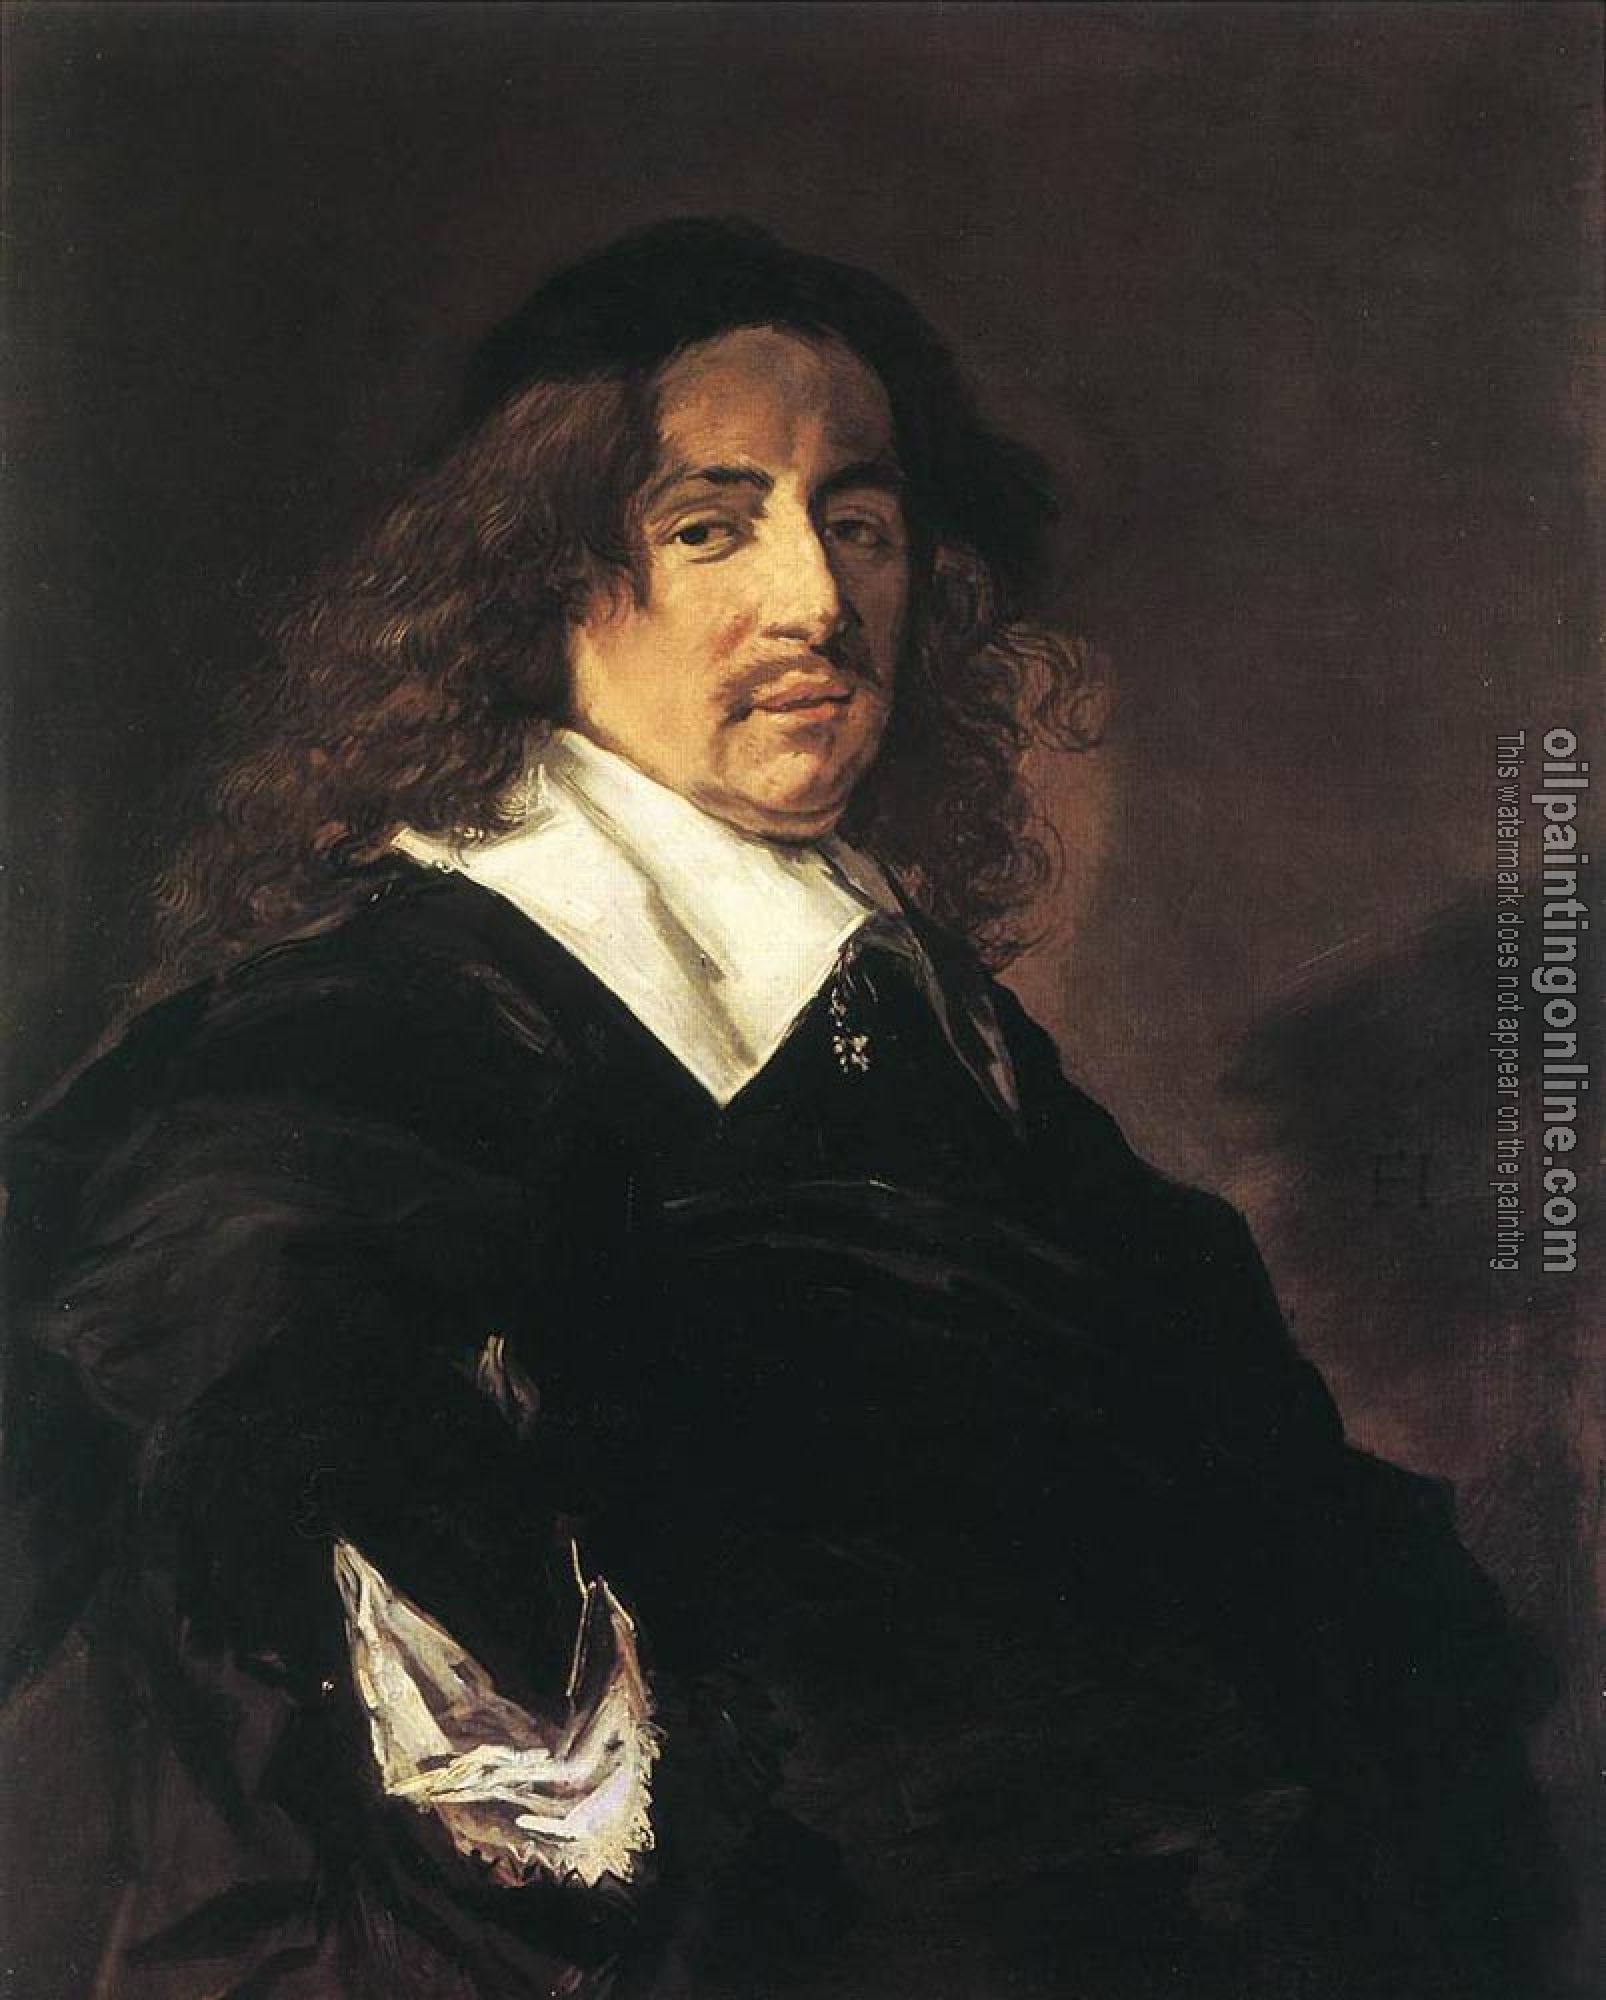 Hals, Frans - Portrait Of A Man